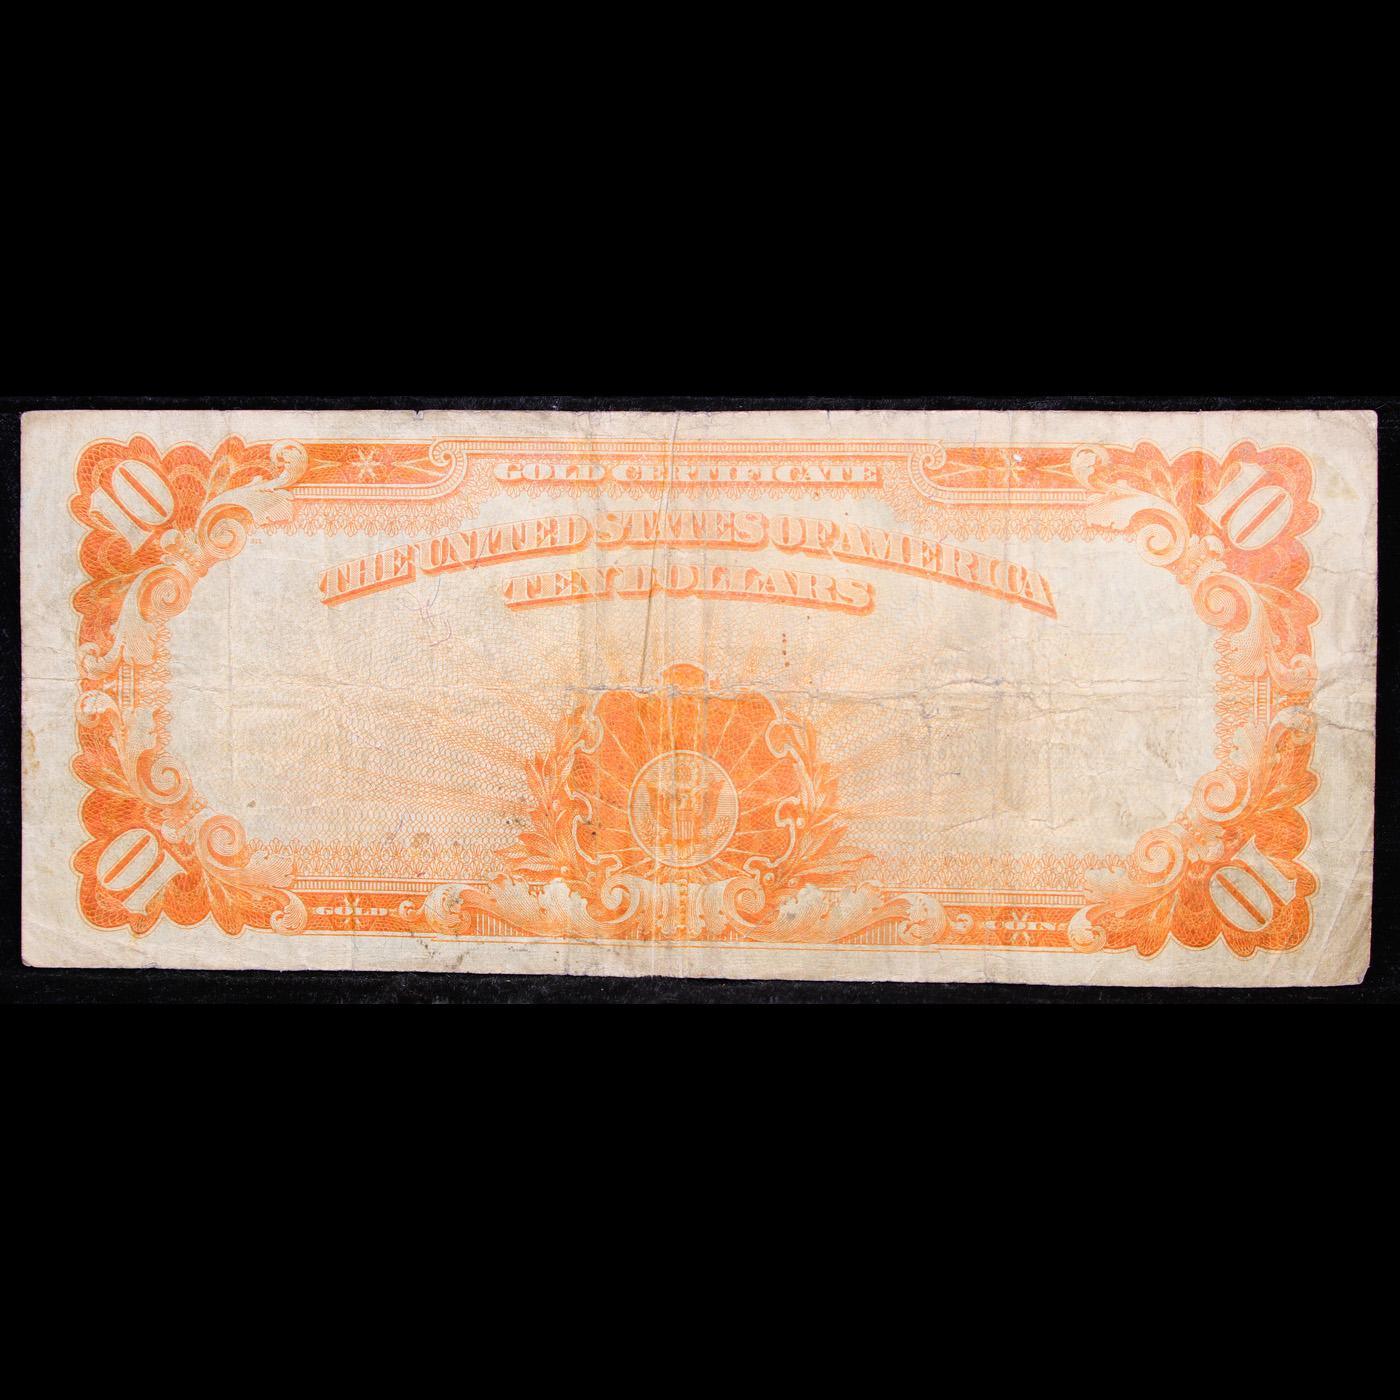 1922 Large Size $10 Gold Certificate Fr-1173 Speelman/White Grades vf+